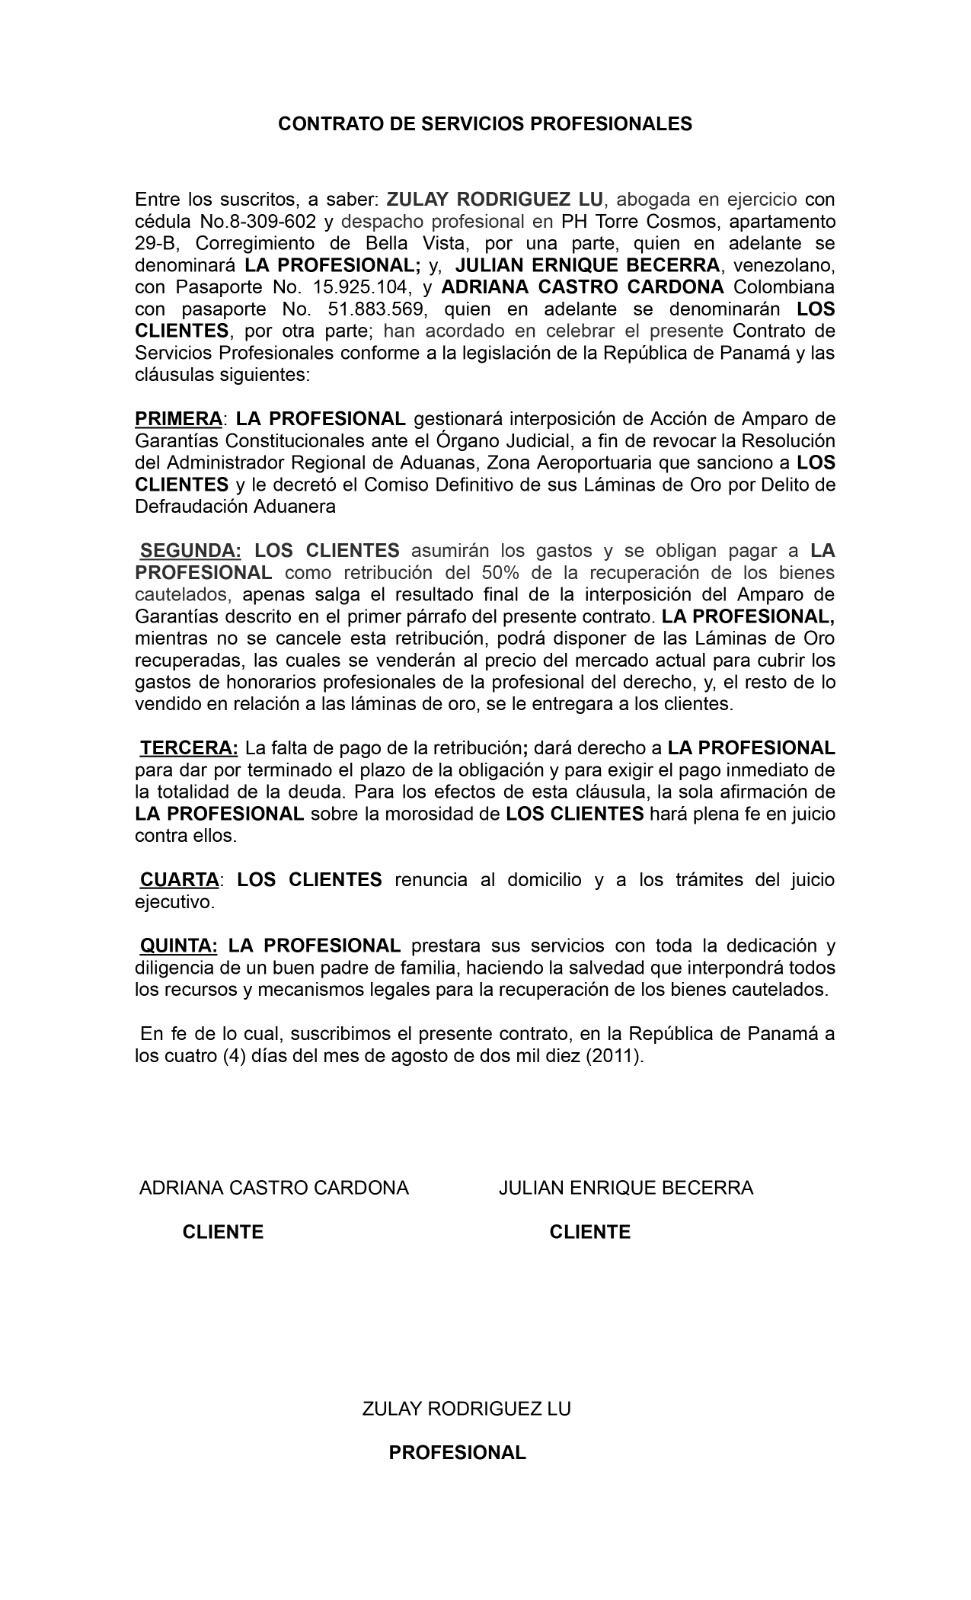 Contrato de servicios de Zulay Rodríguez con familiares de Juan Mauricio Becerra.